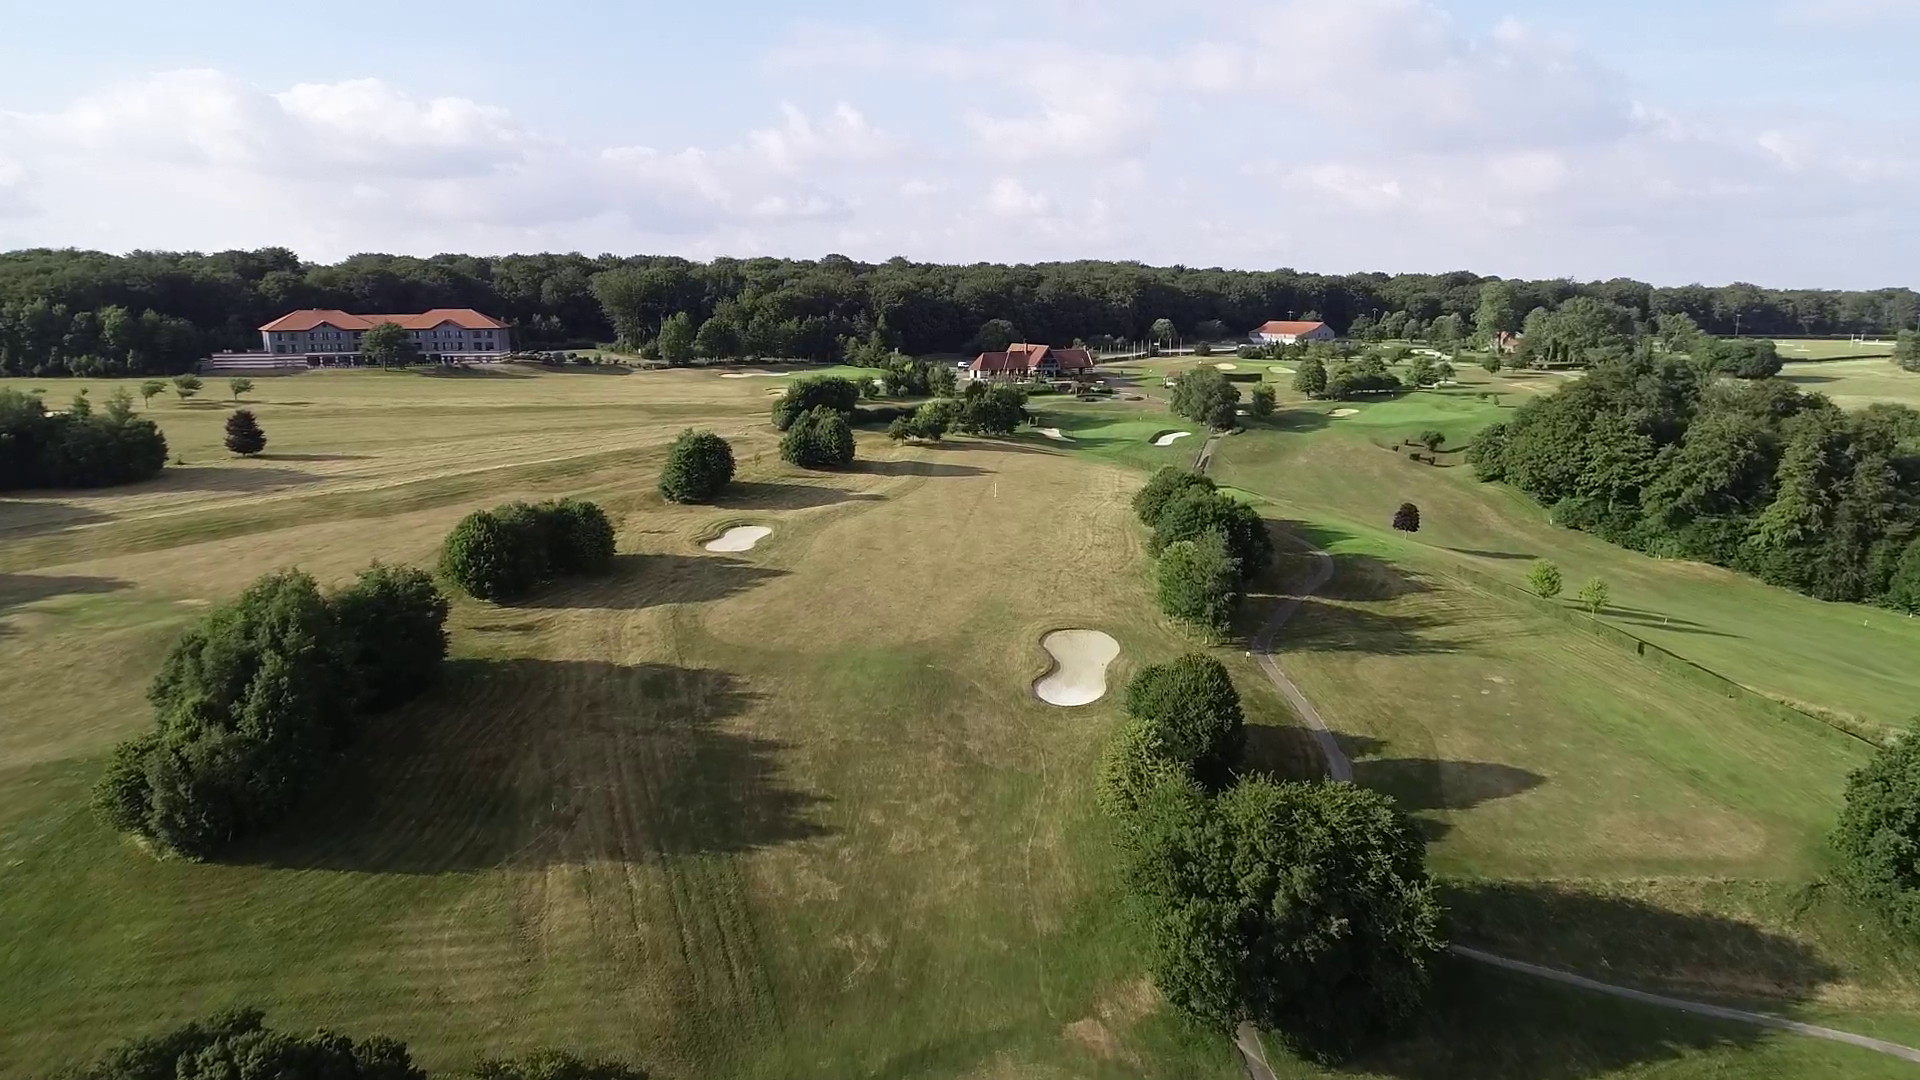 Le Golf de la semaine : Aa Saint-Omer Golf Club